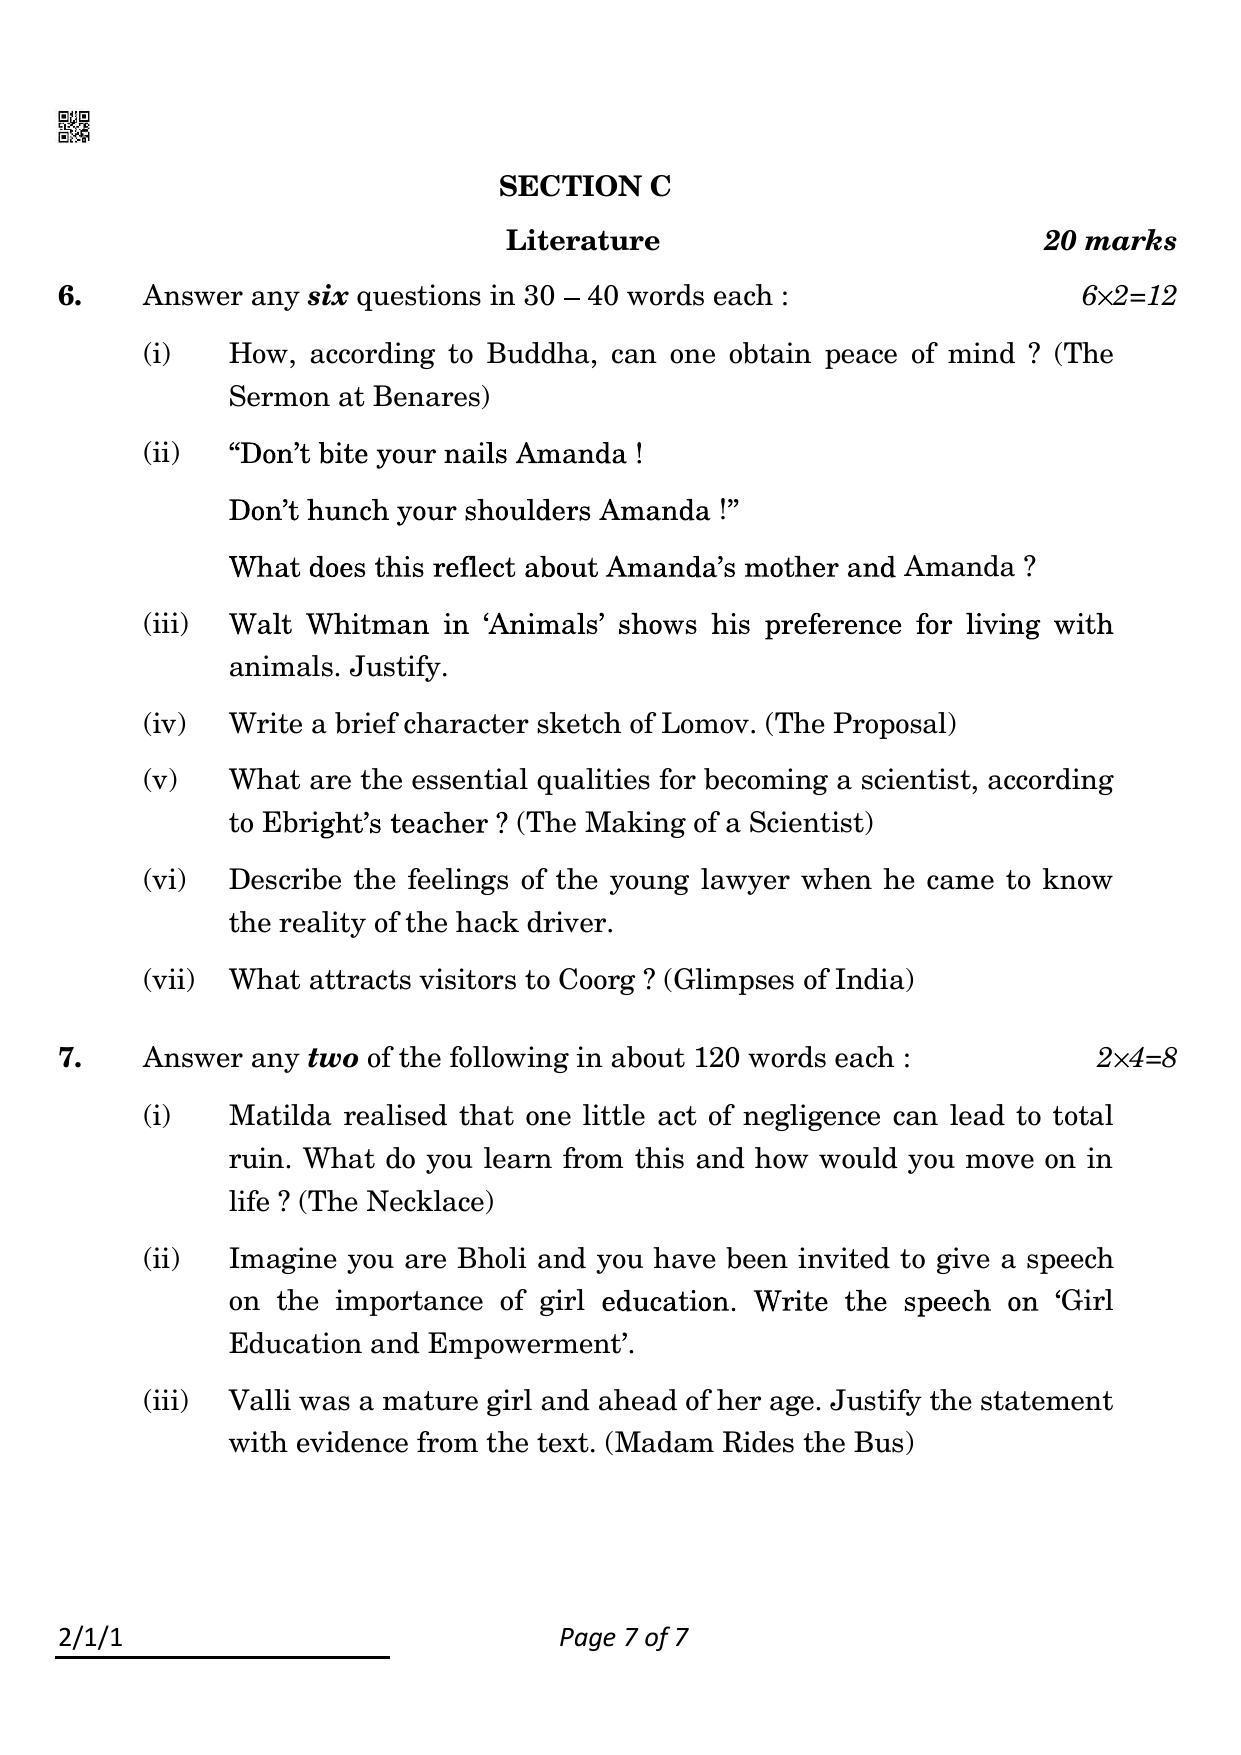 CBSE Class 10 2-1-1 English L & L 2022 Question Paper - Page 7